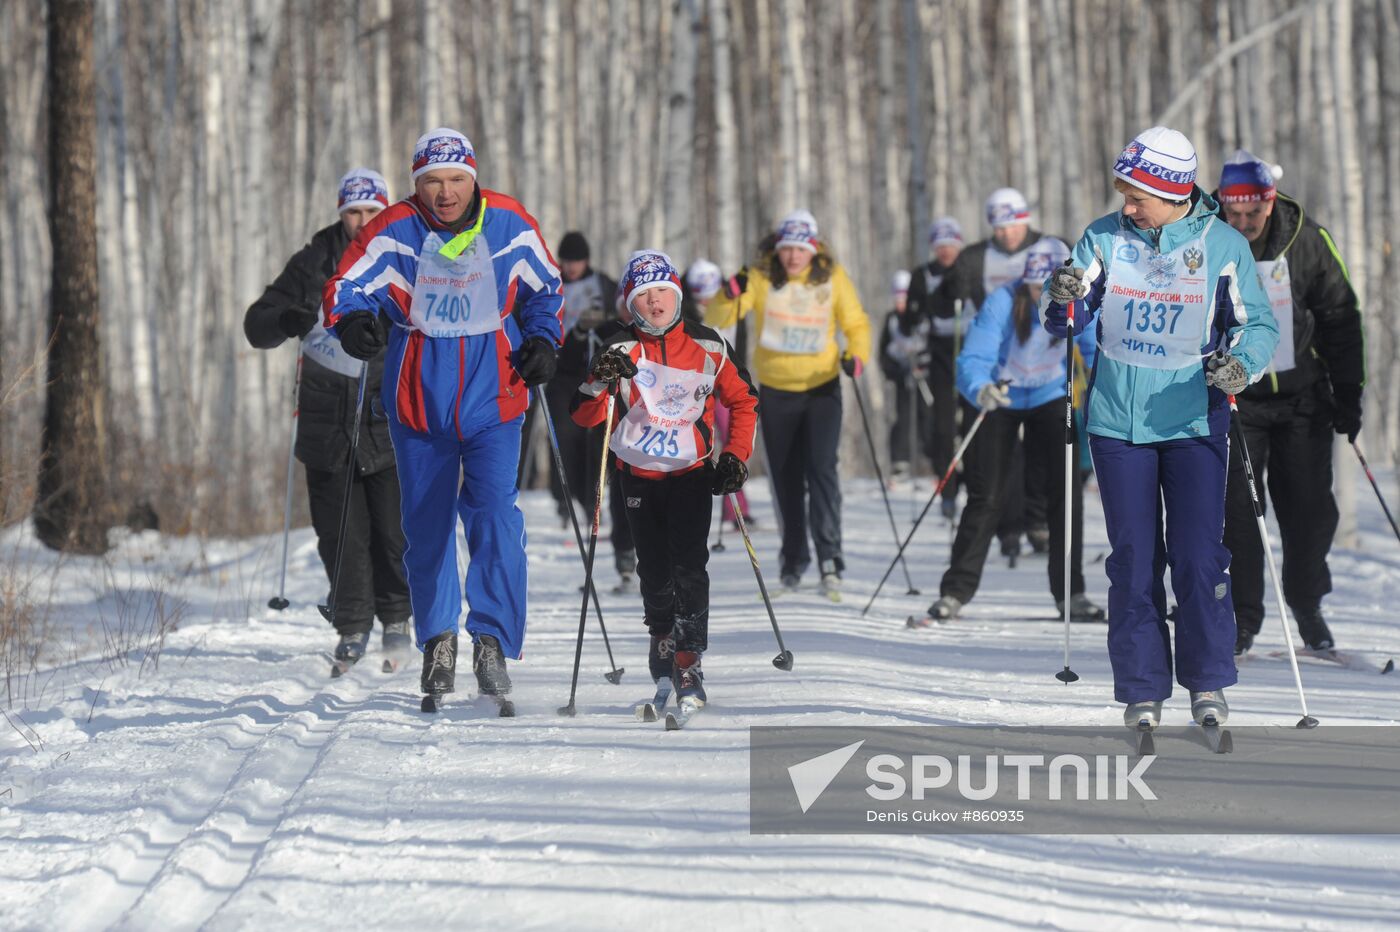 Russian Ski Track 2011 nationwide race in Chita